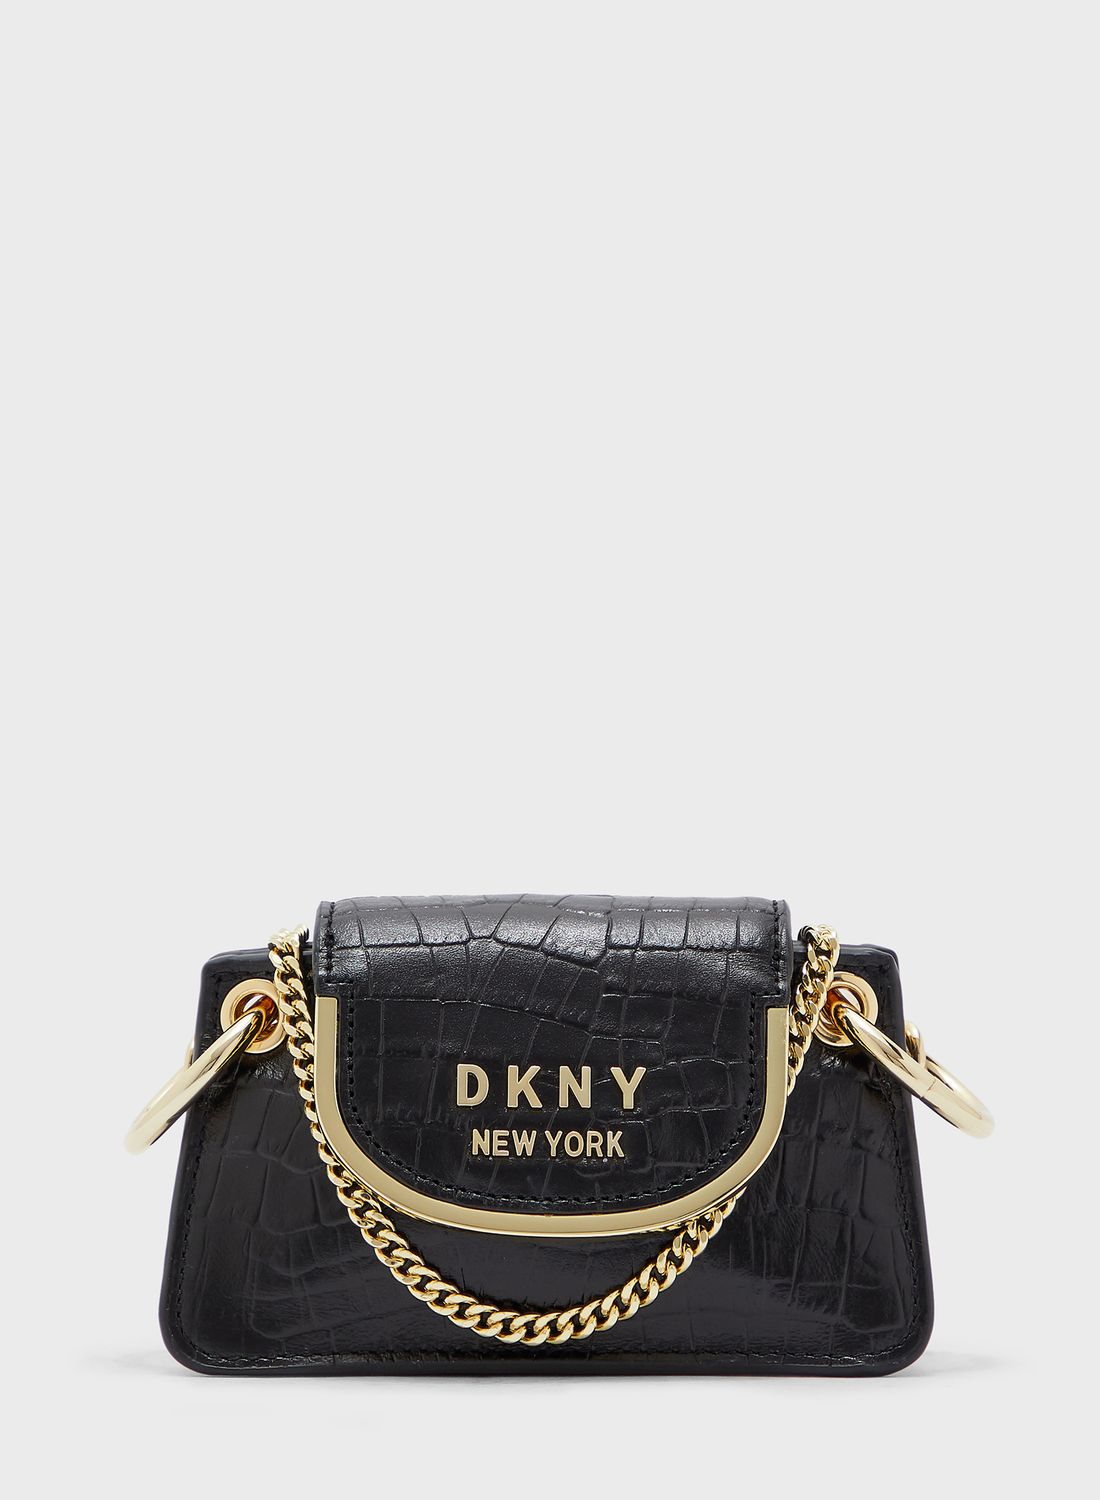 DKNY Micro Mini Leather Crossbody Black New